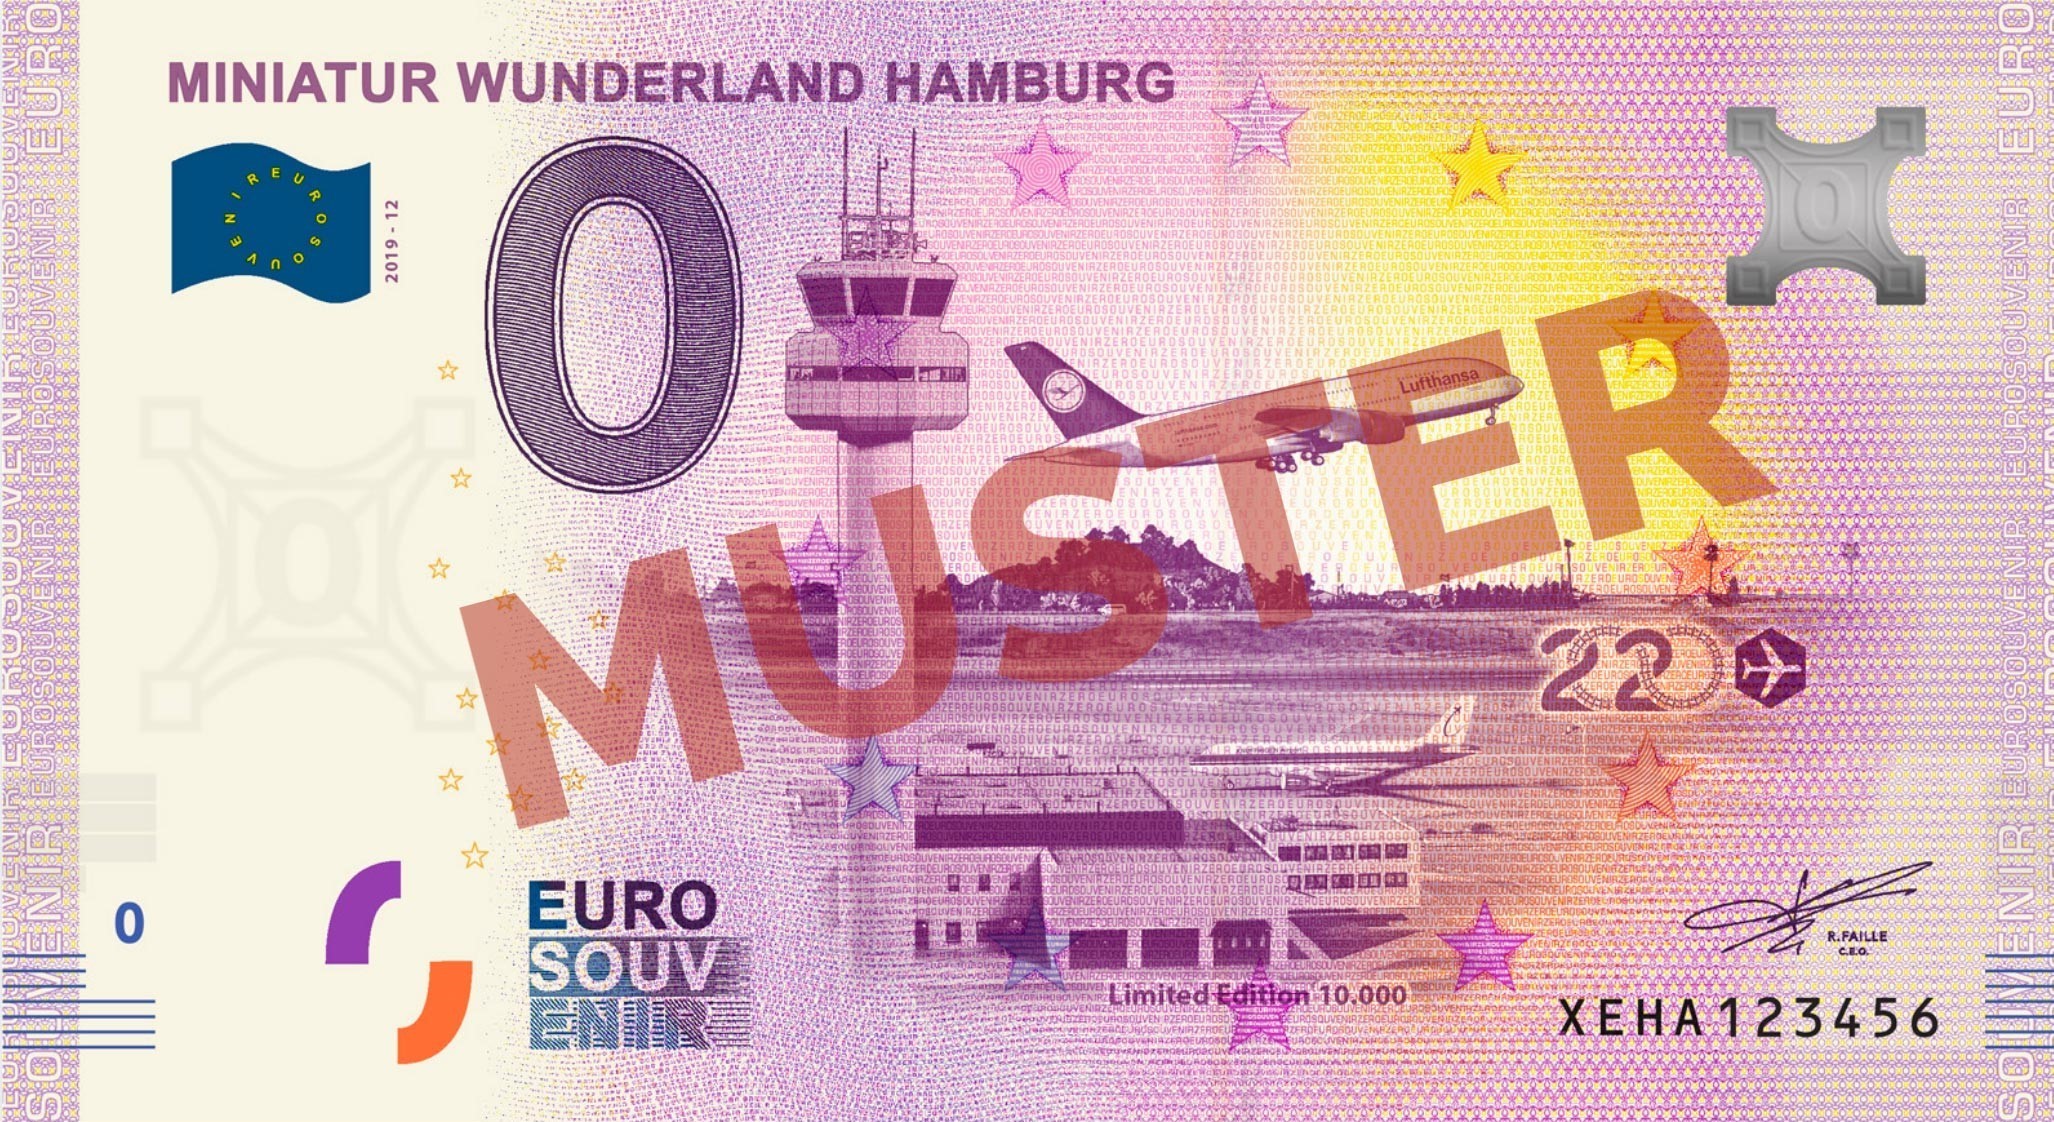 Eurosouvenir 0 Euro Schein Miniatur Wunderland Hamburg 2019  Venedig 2018-5